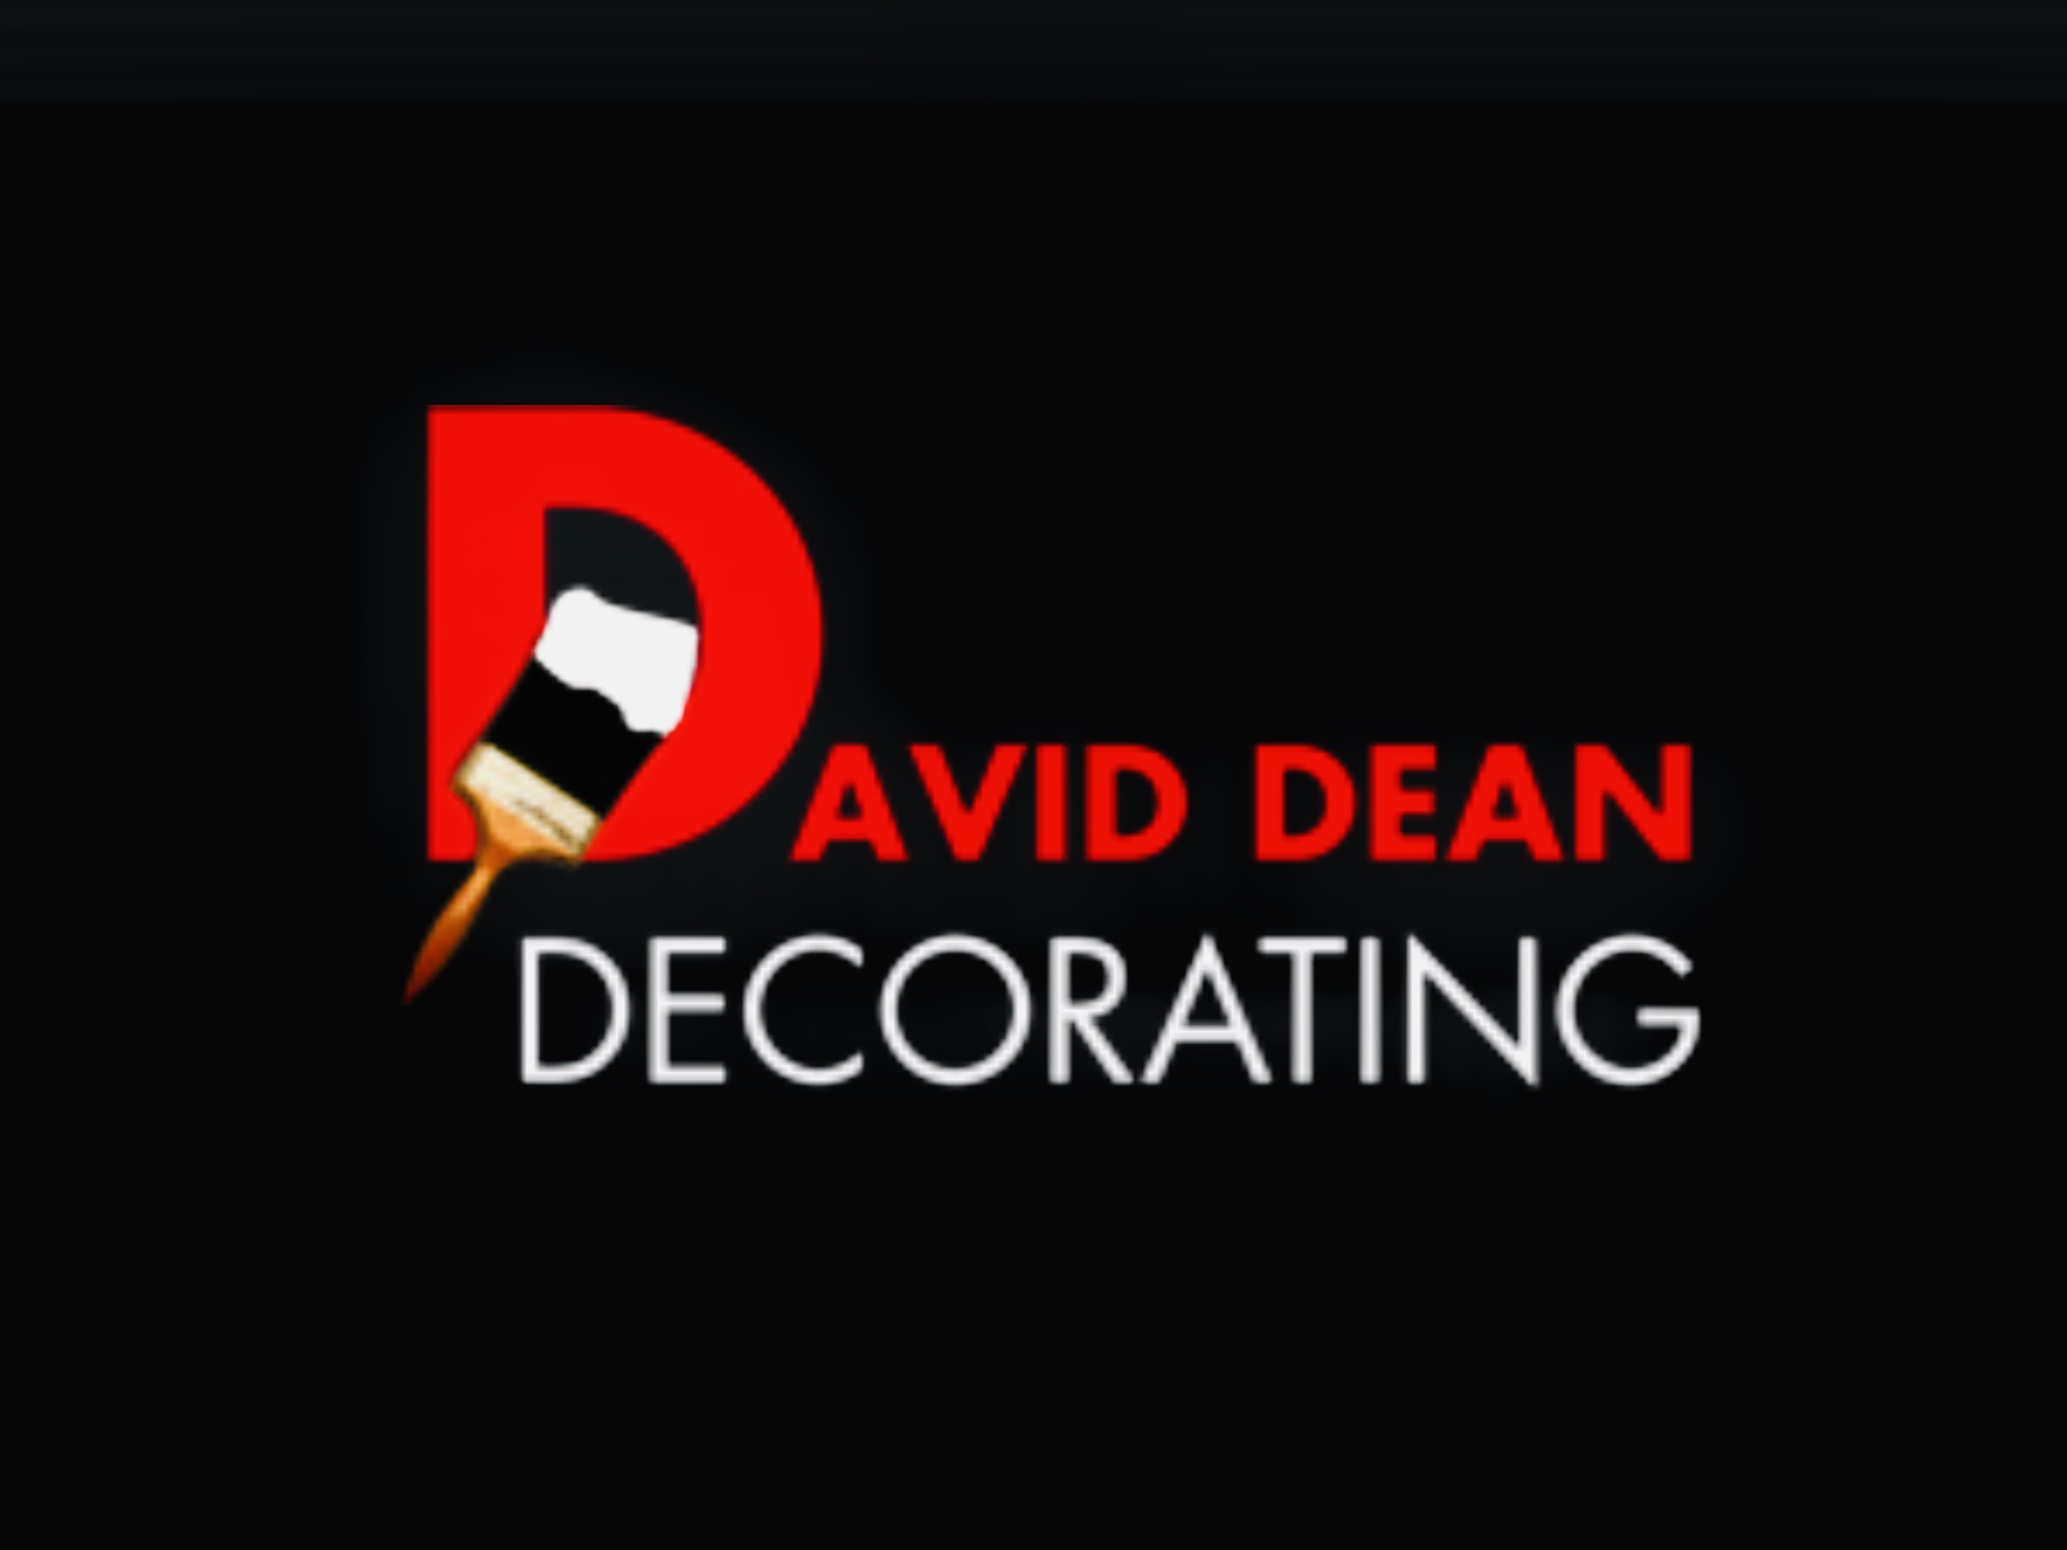 DAVID DEAN DECORATING